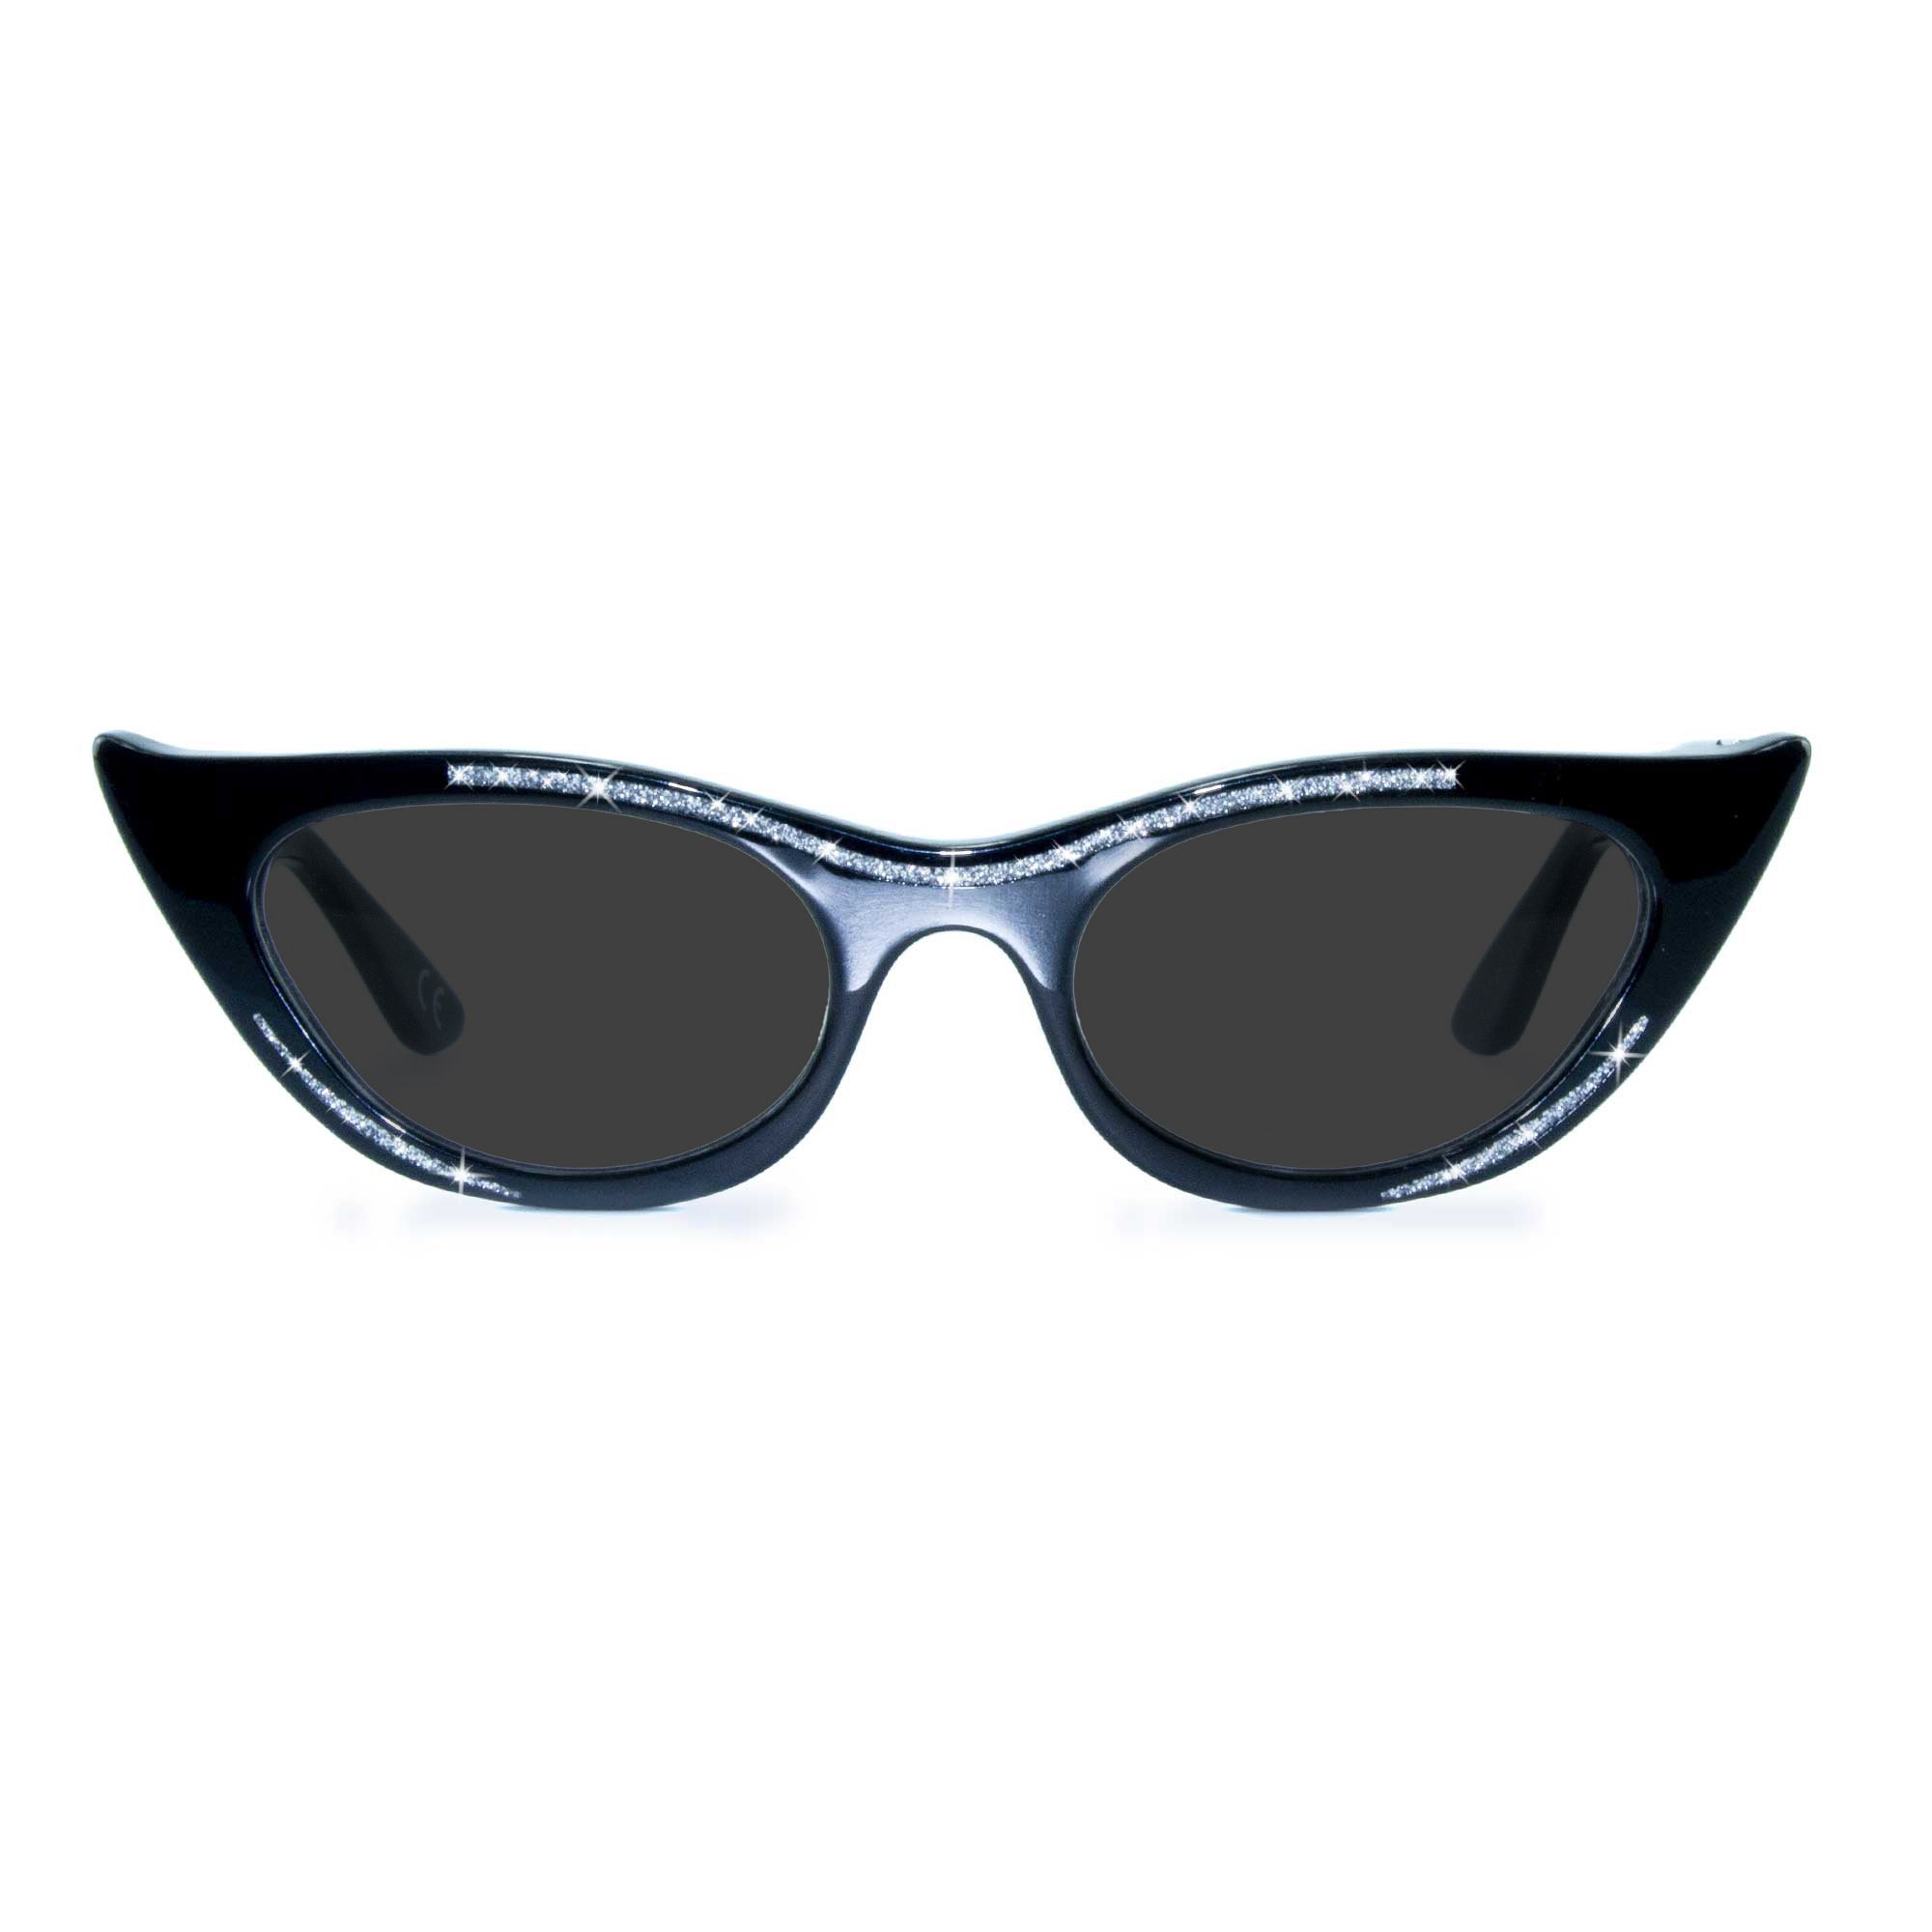 black winged cat eye sunglasses